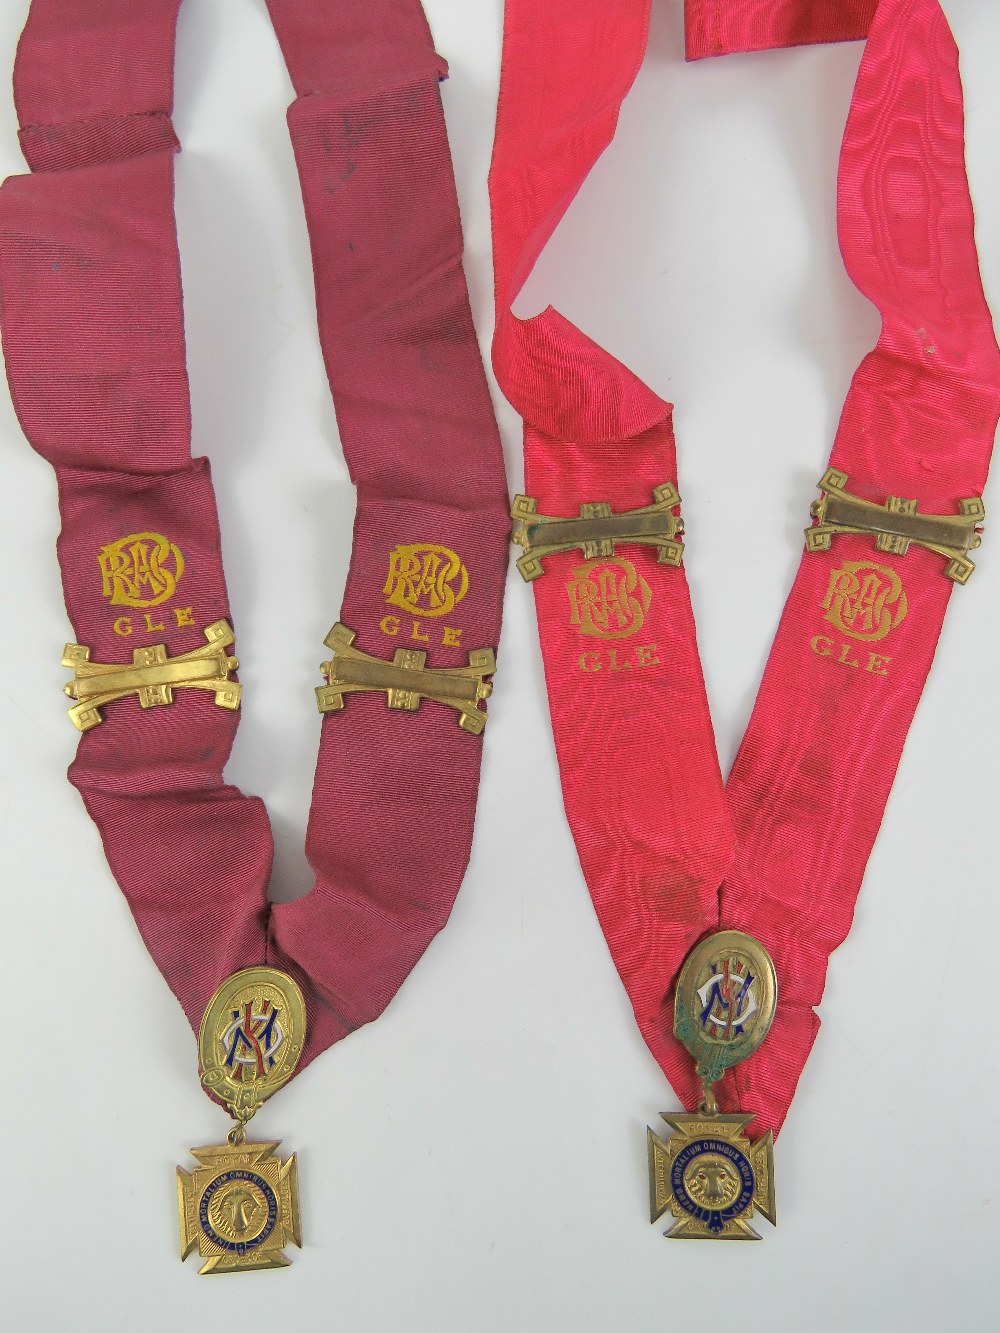 The Royal Antediluvian Order of Buffaloes (RAOB); KOM collarettes, one presented to Bro.